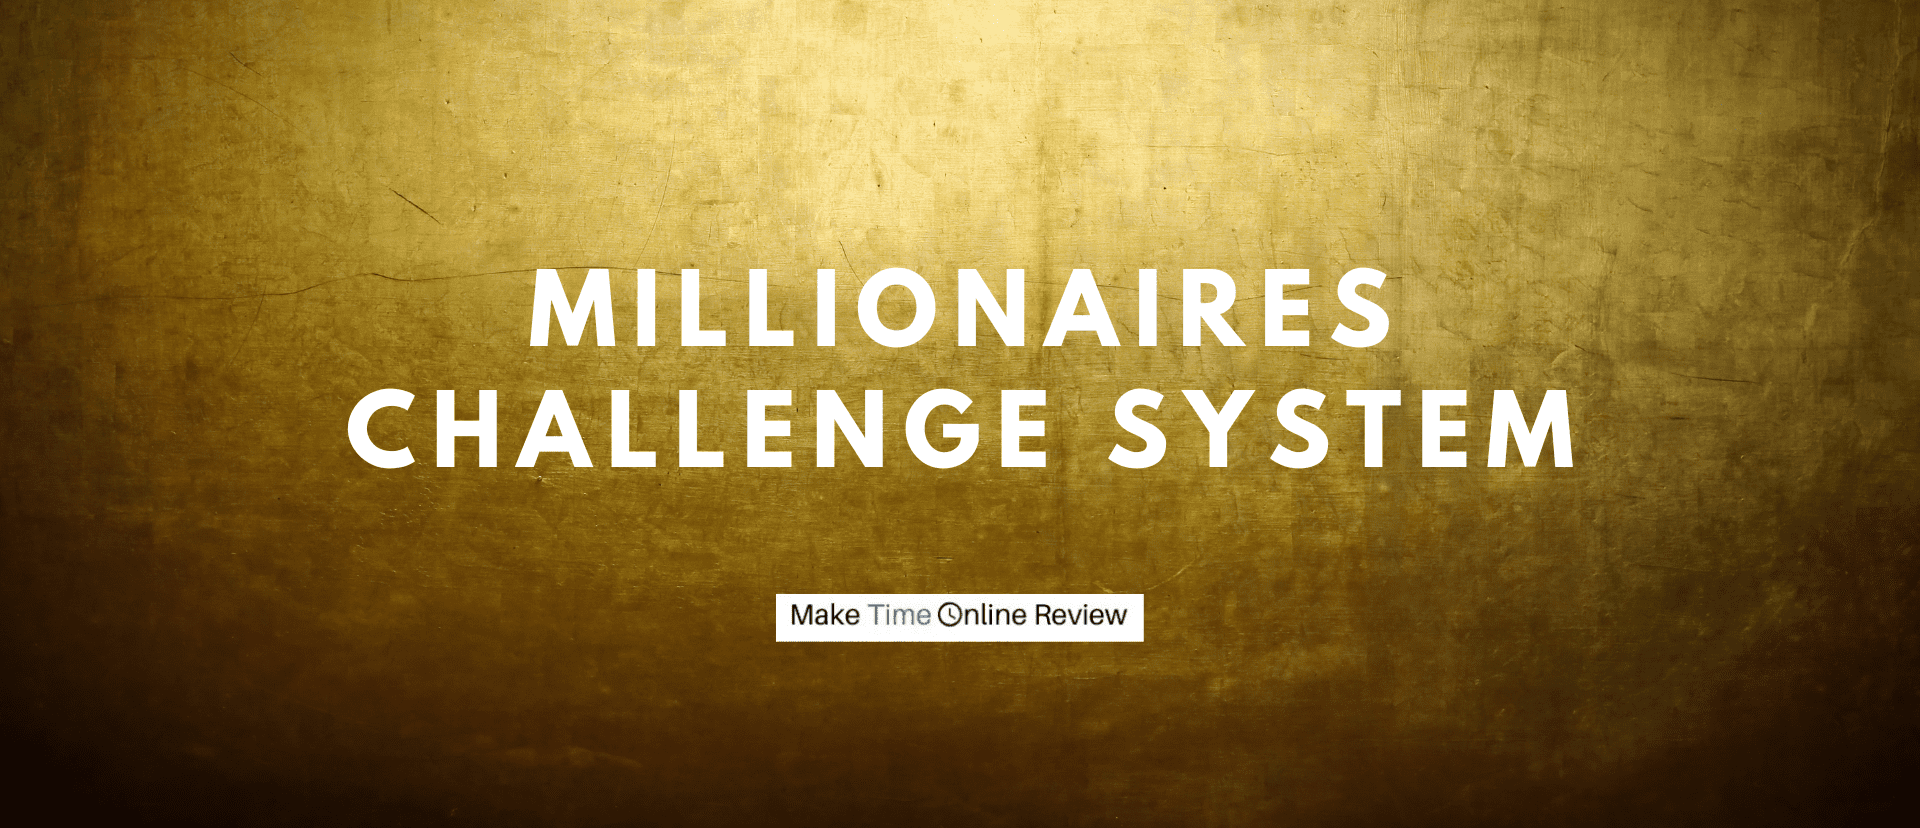 Millionaires Challenge System